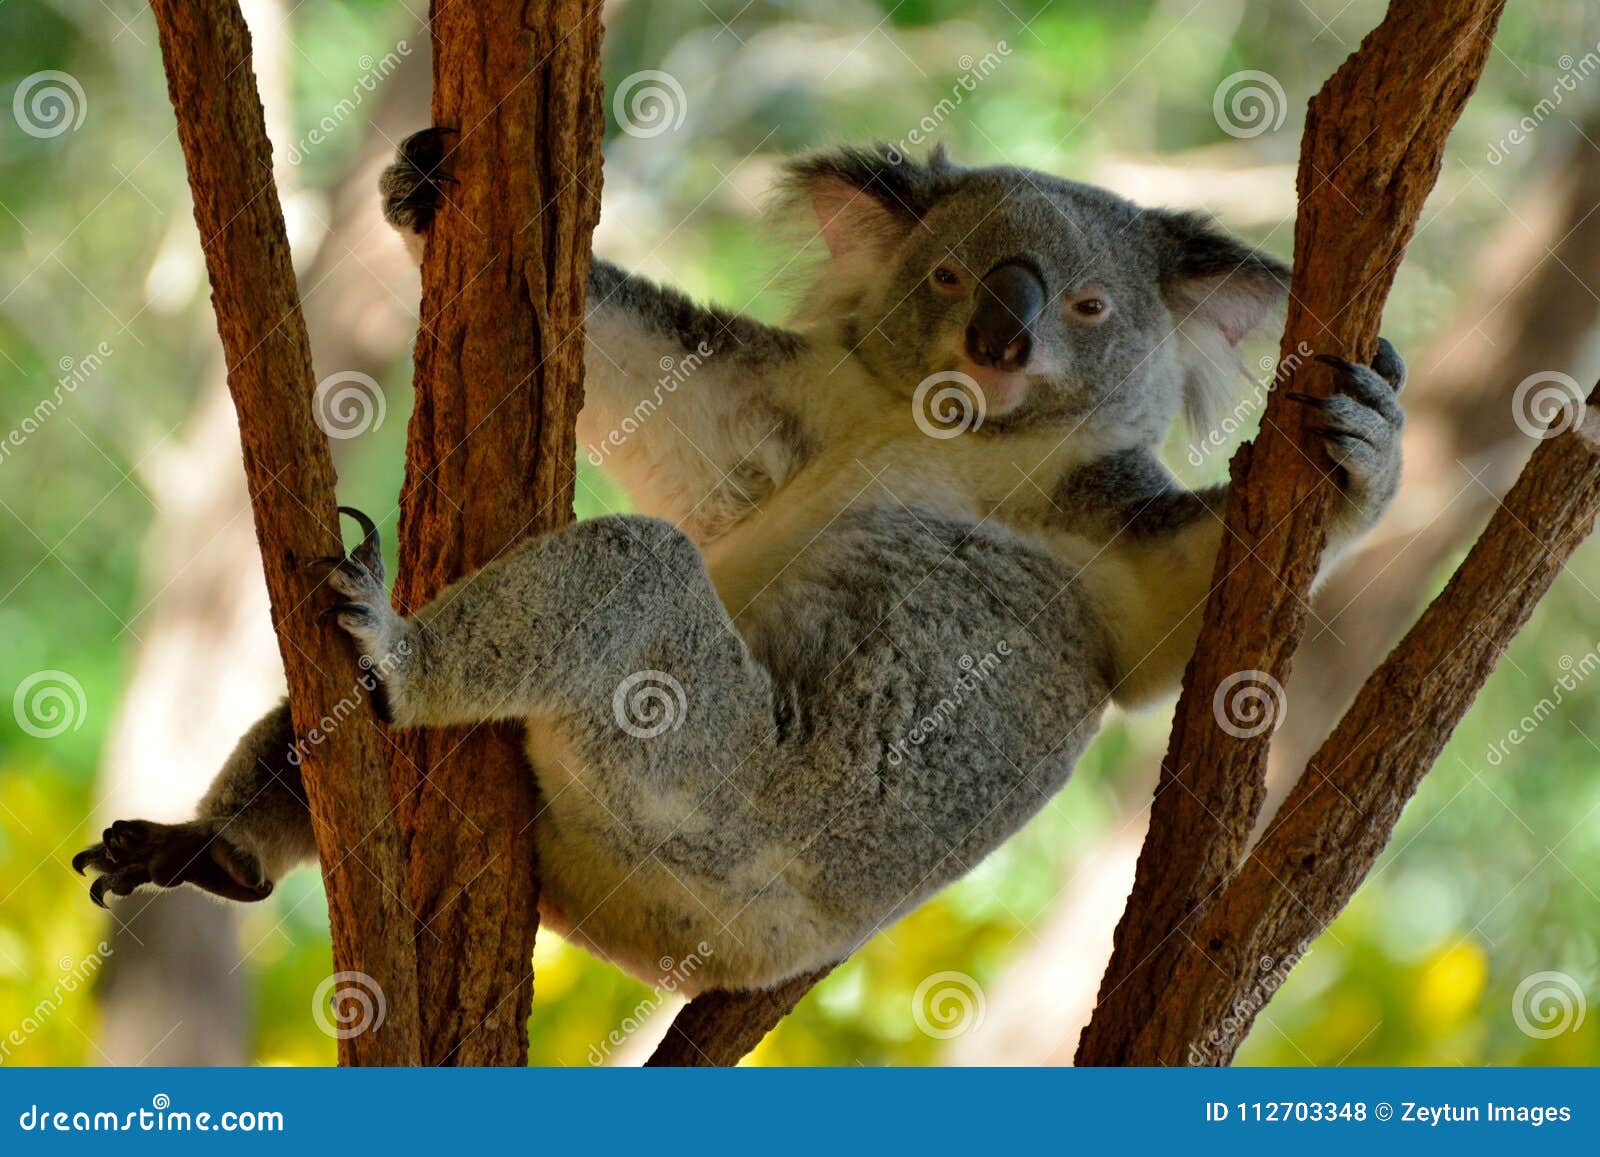 Funny Koala on Eucalyptus Tree in Queensland, Australia. Stock Photo -  Image of background, embracing: 112703348